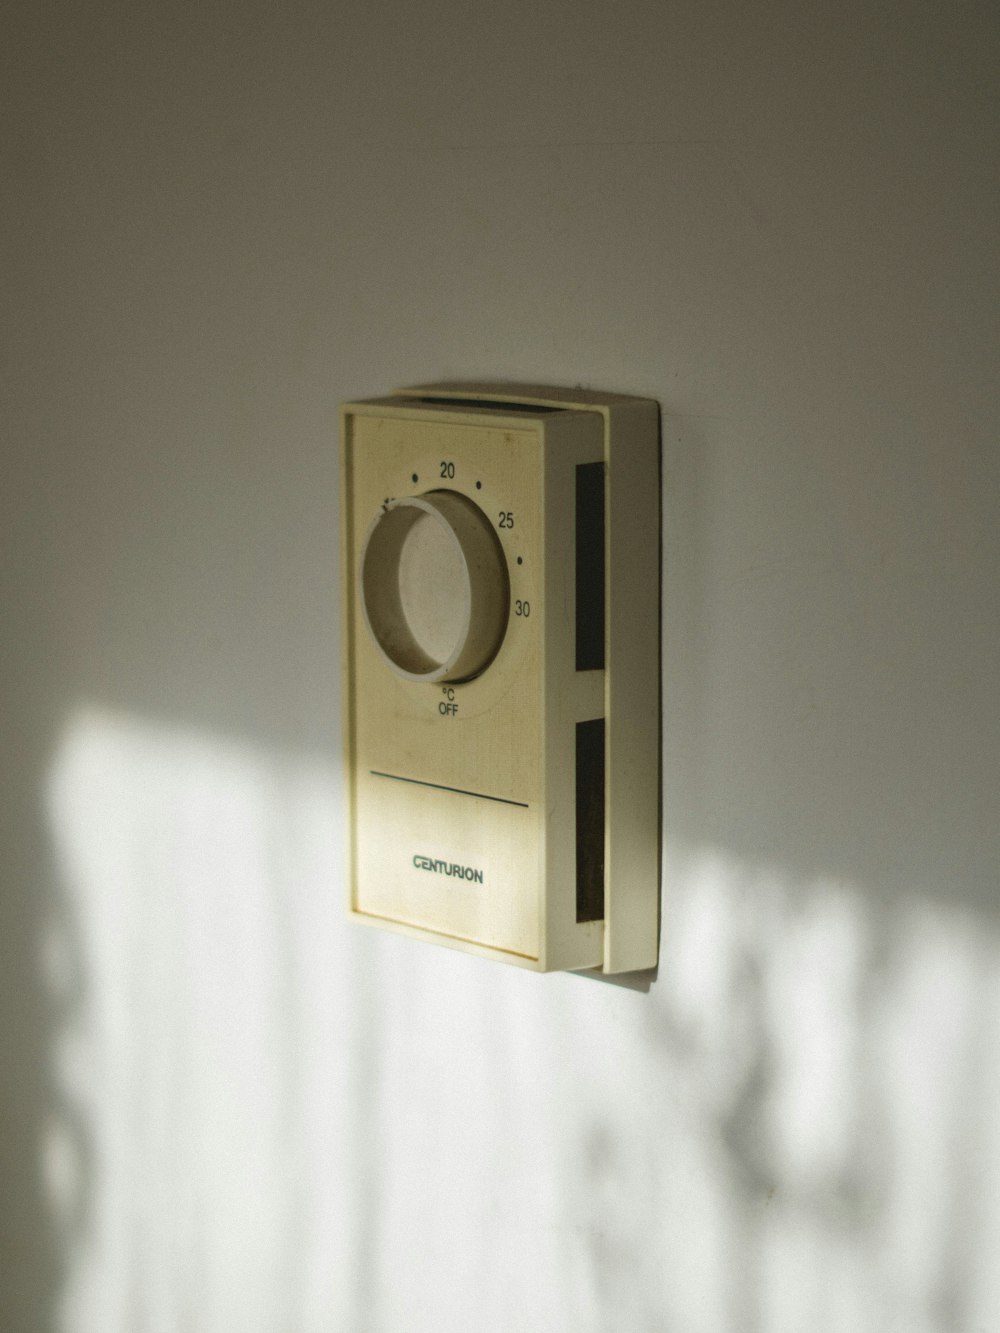 controlador de electrodomésticos Centurion beige en la pared